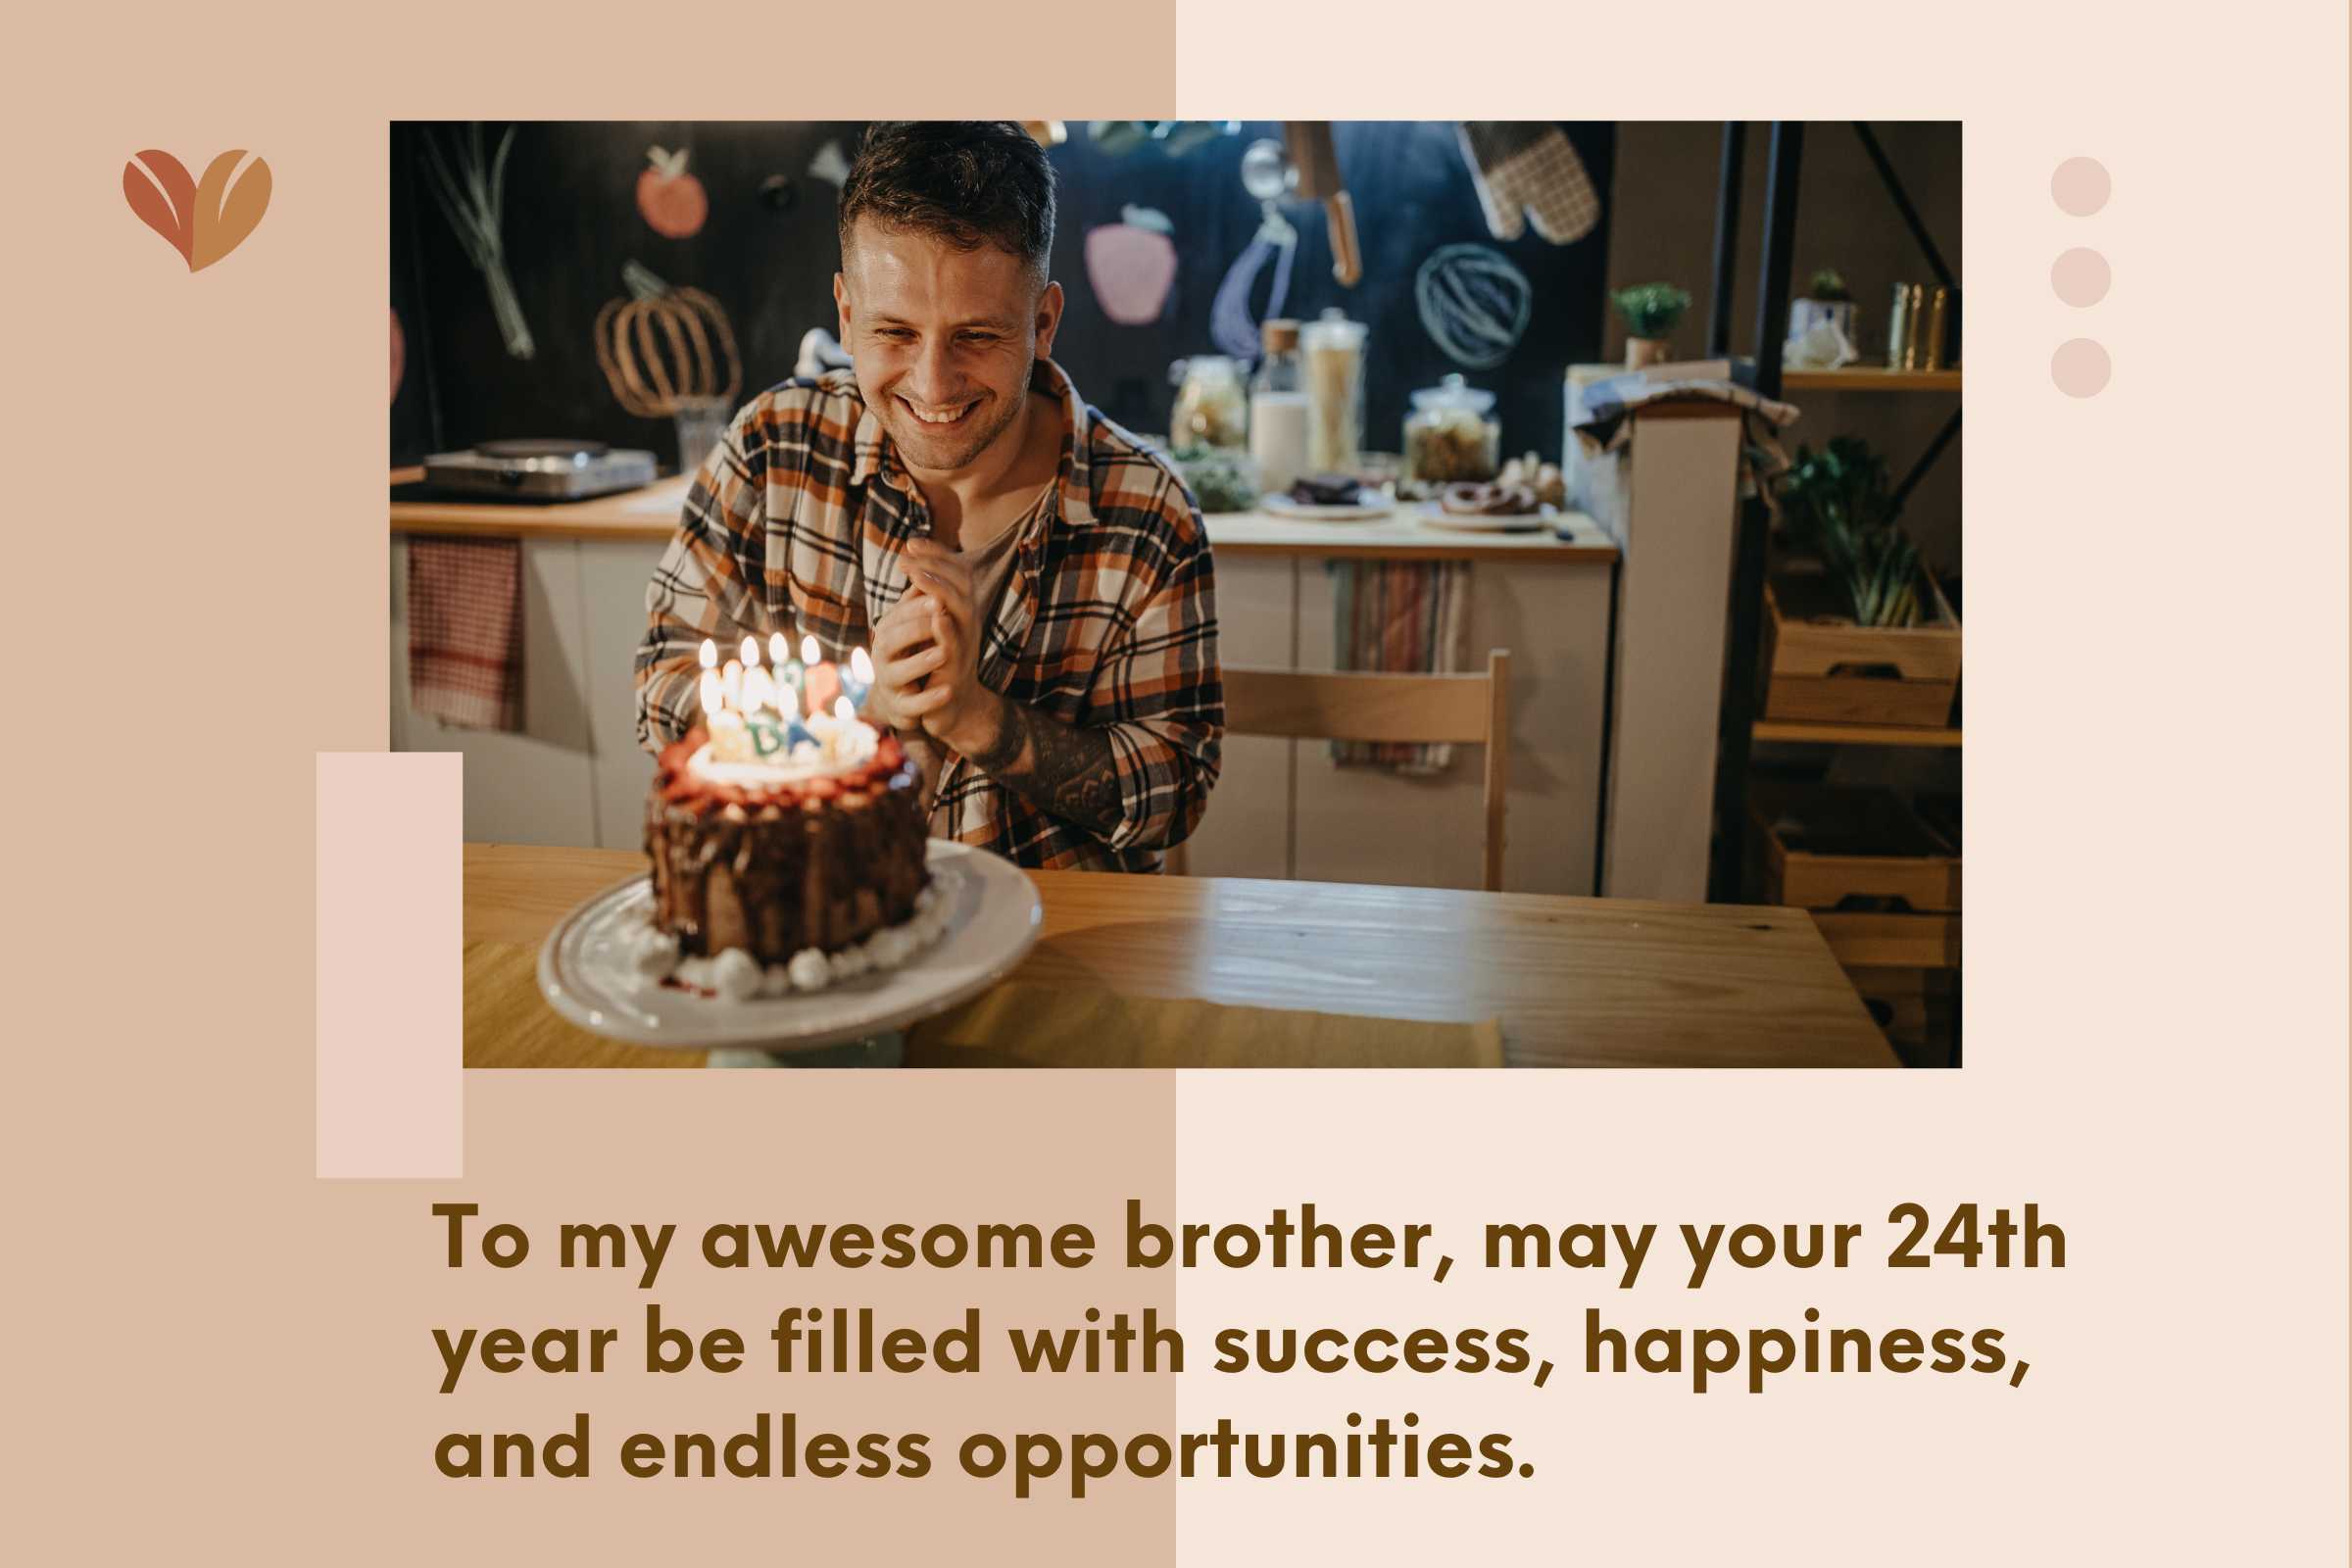 Wishing my brother a fantastic happy 24th birthday